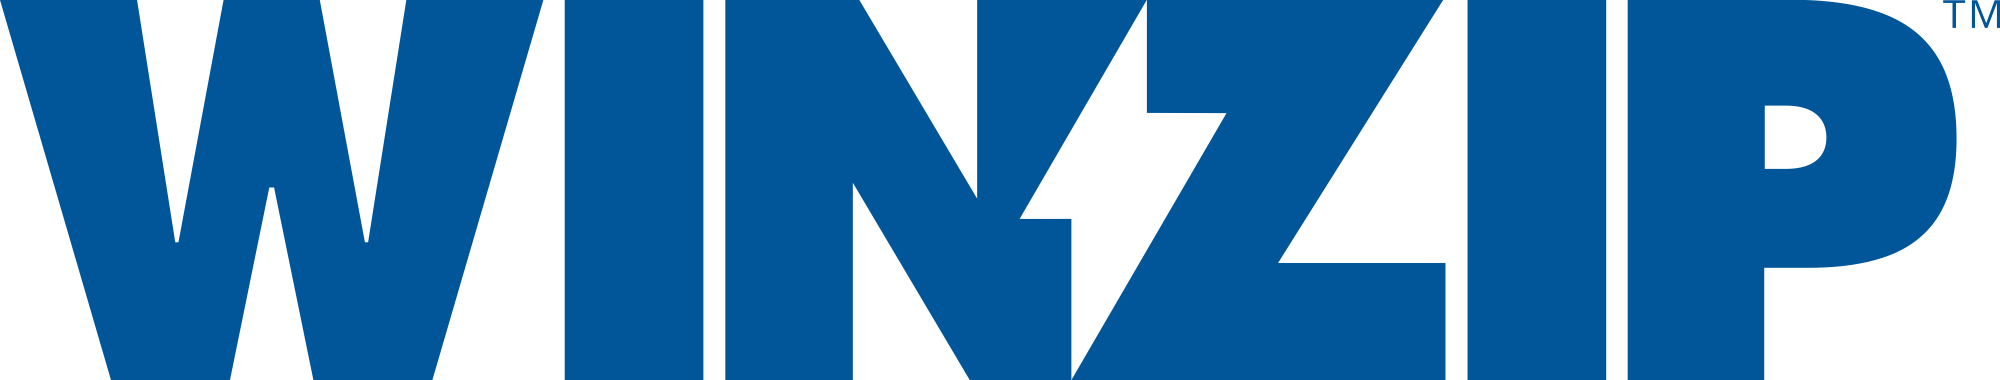 WinZip Corporate Logo